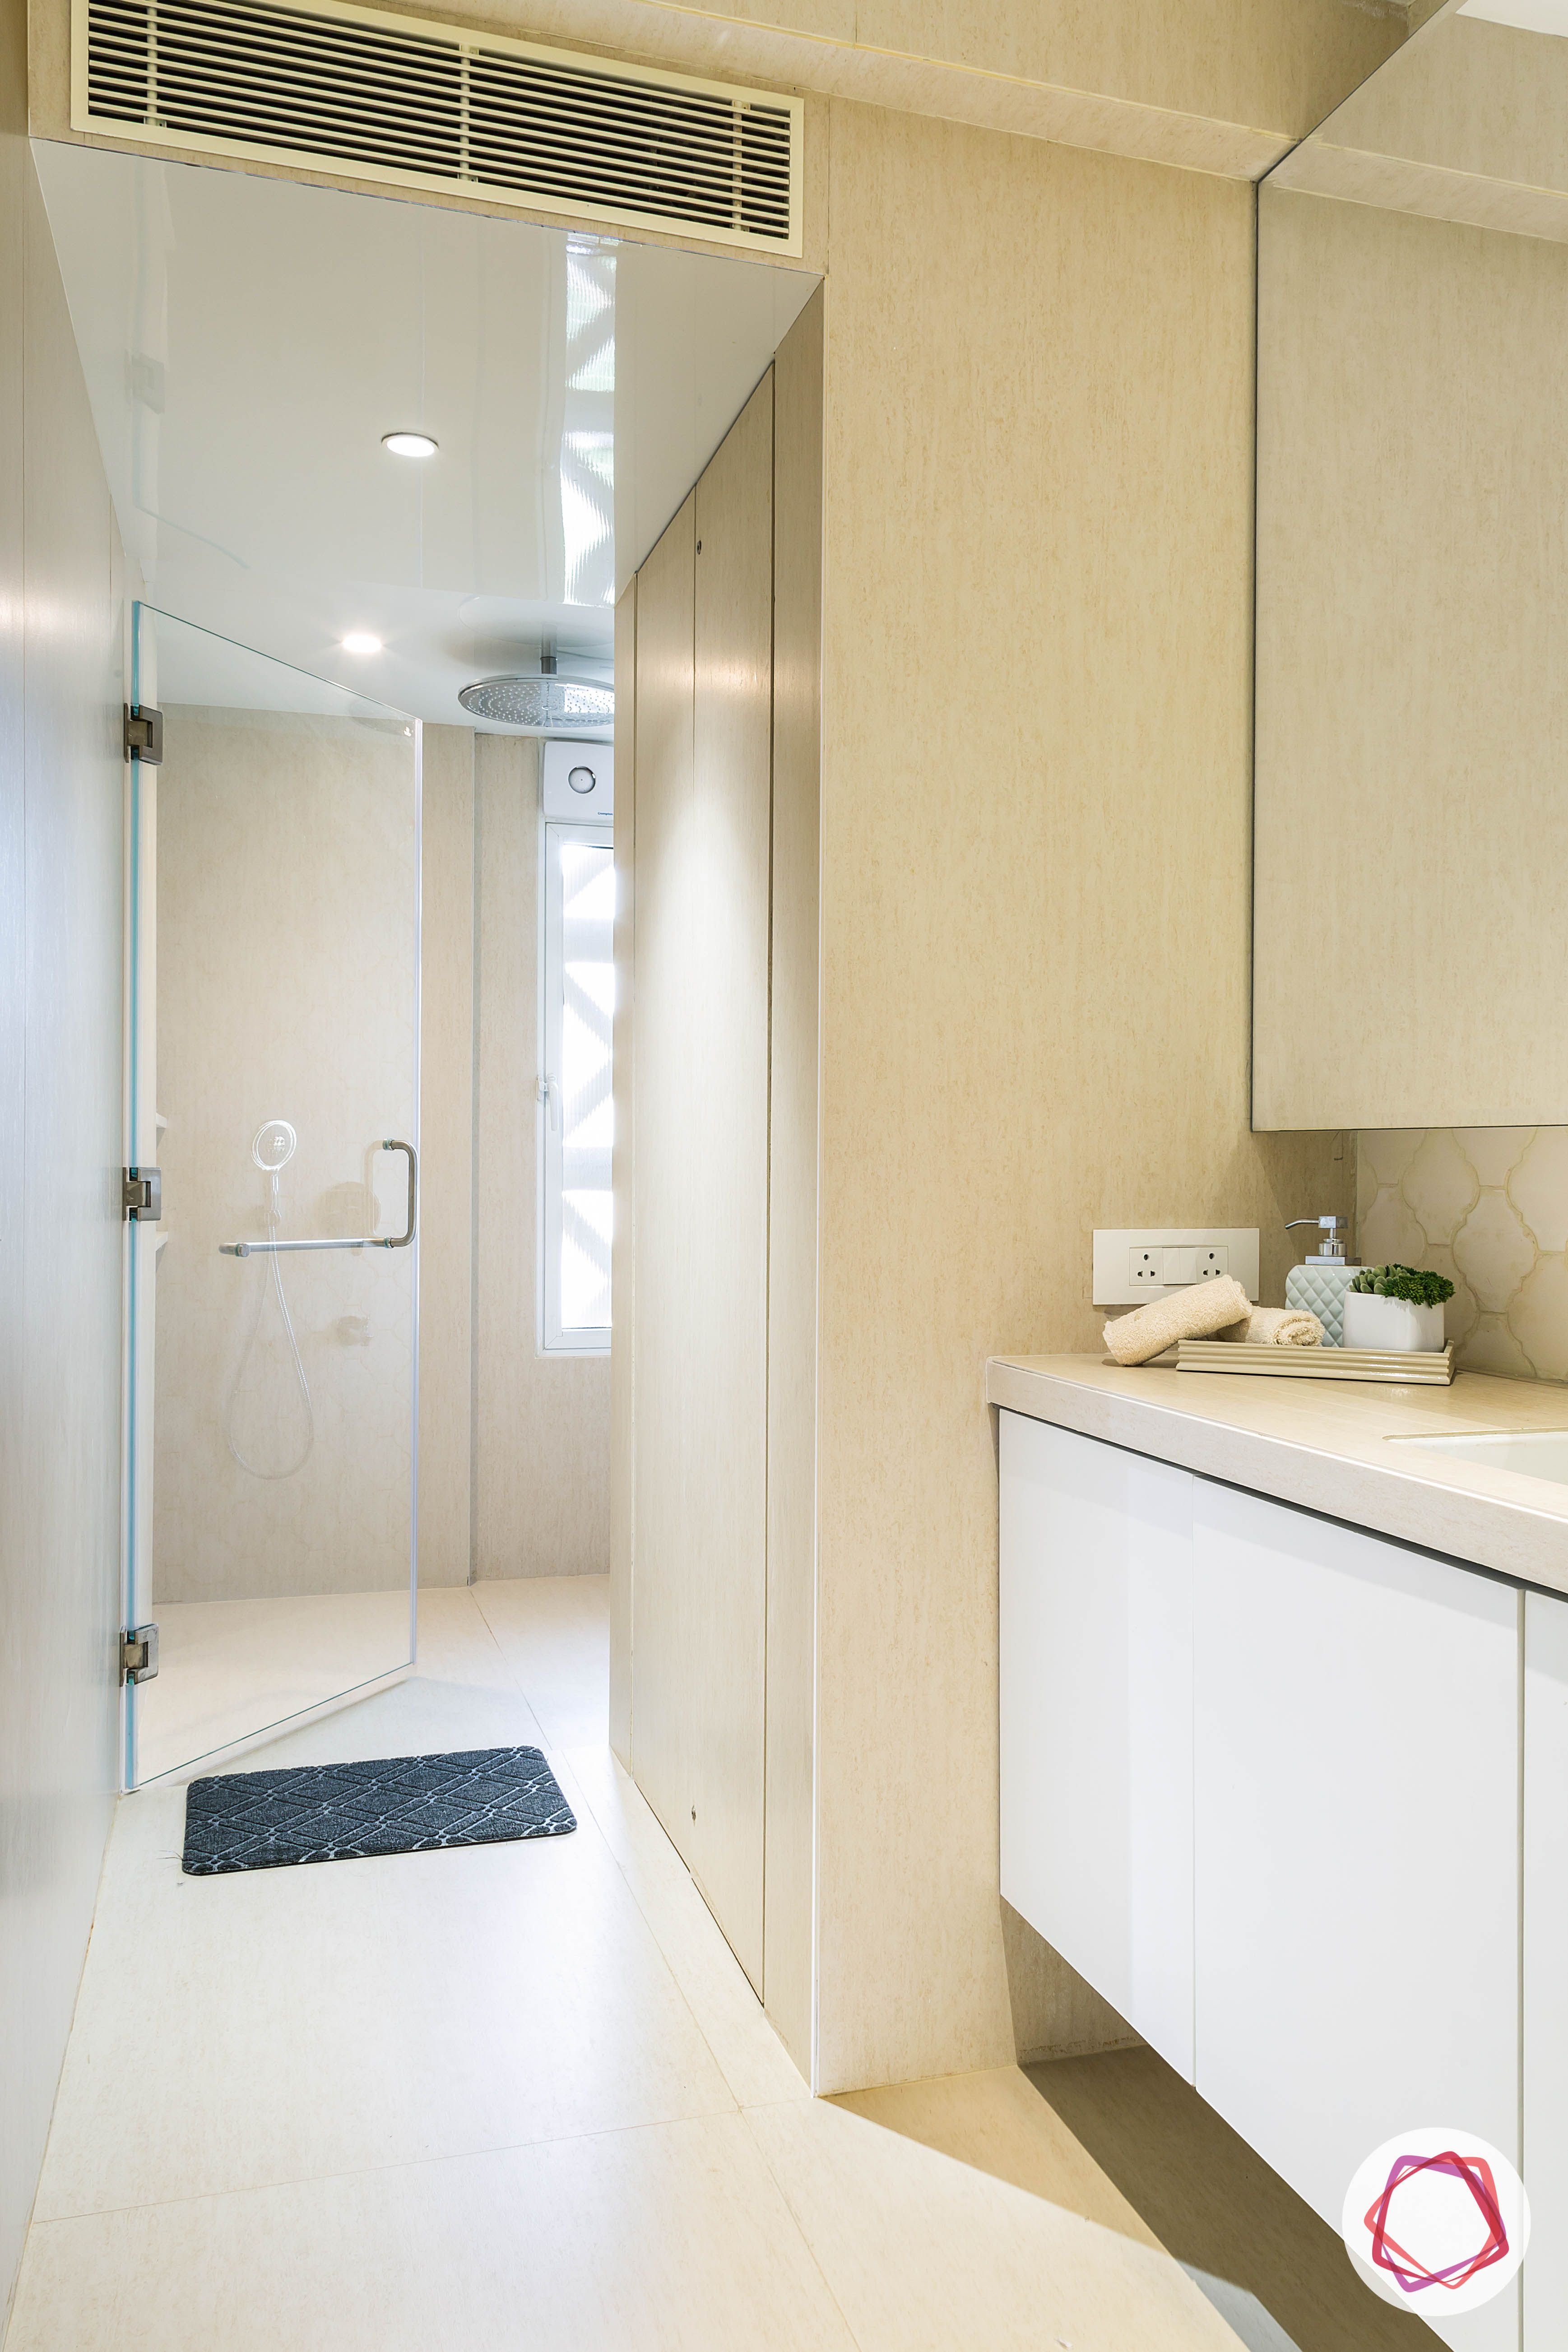 4bhk house plan-bathroom designs-bathroom tiles-moroccan tiles-vanity unit-countertop-shower area